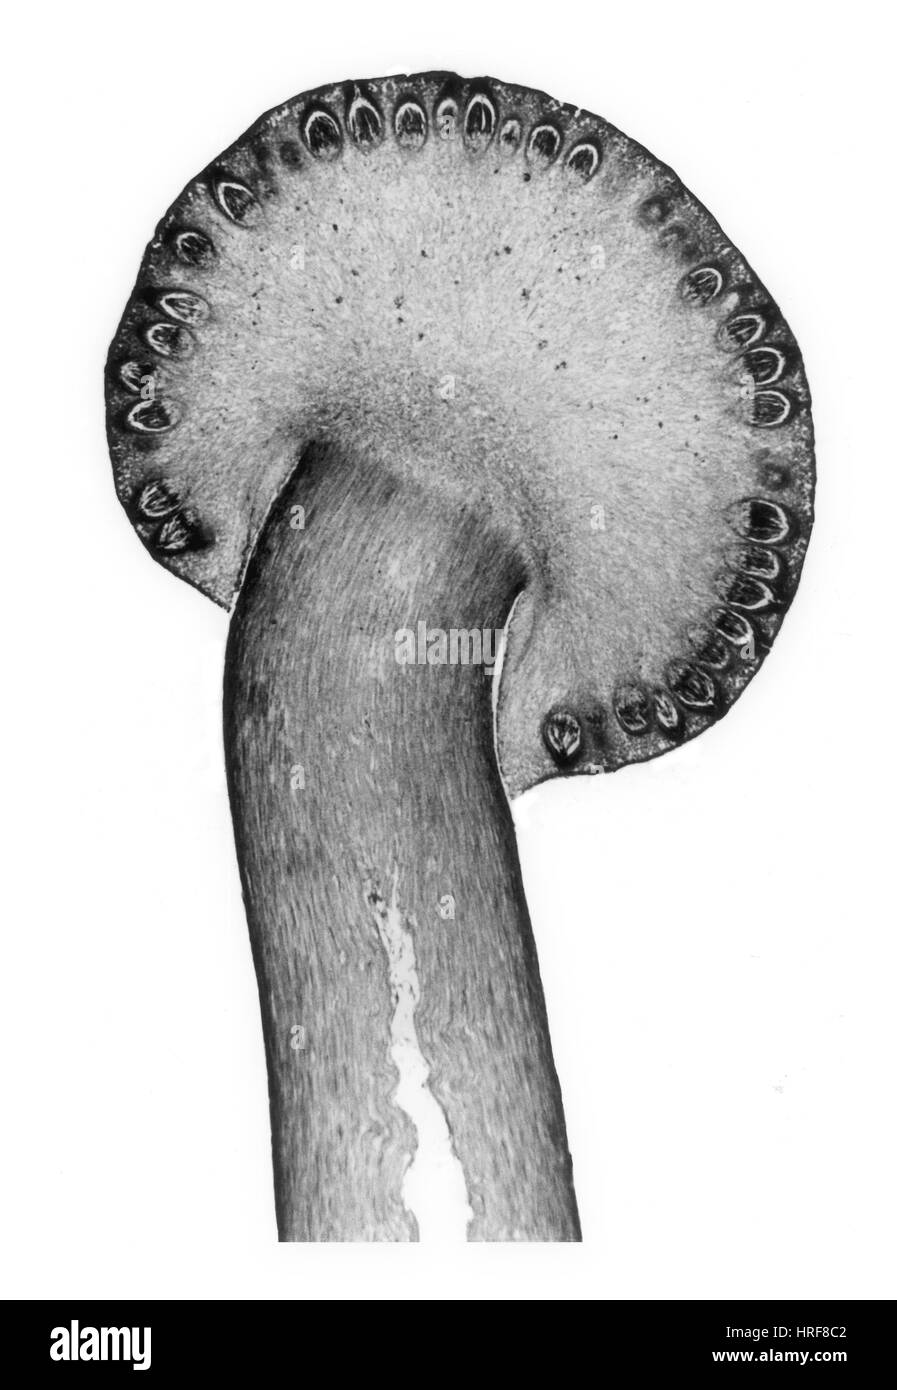 Stoma of Claviceps purpurea Stock Photo